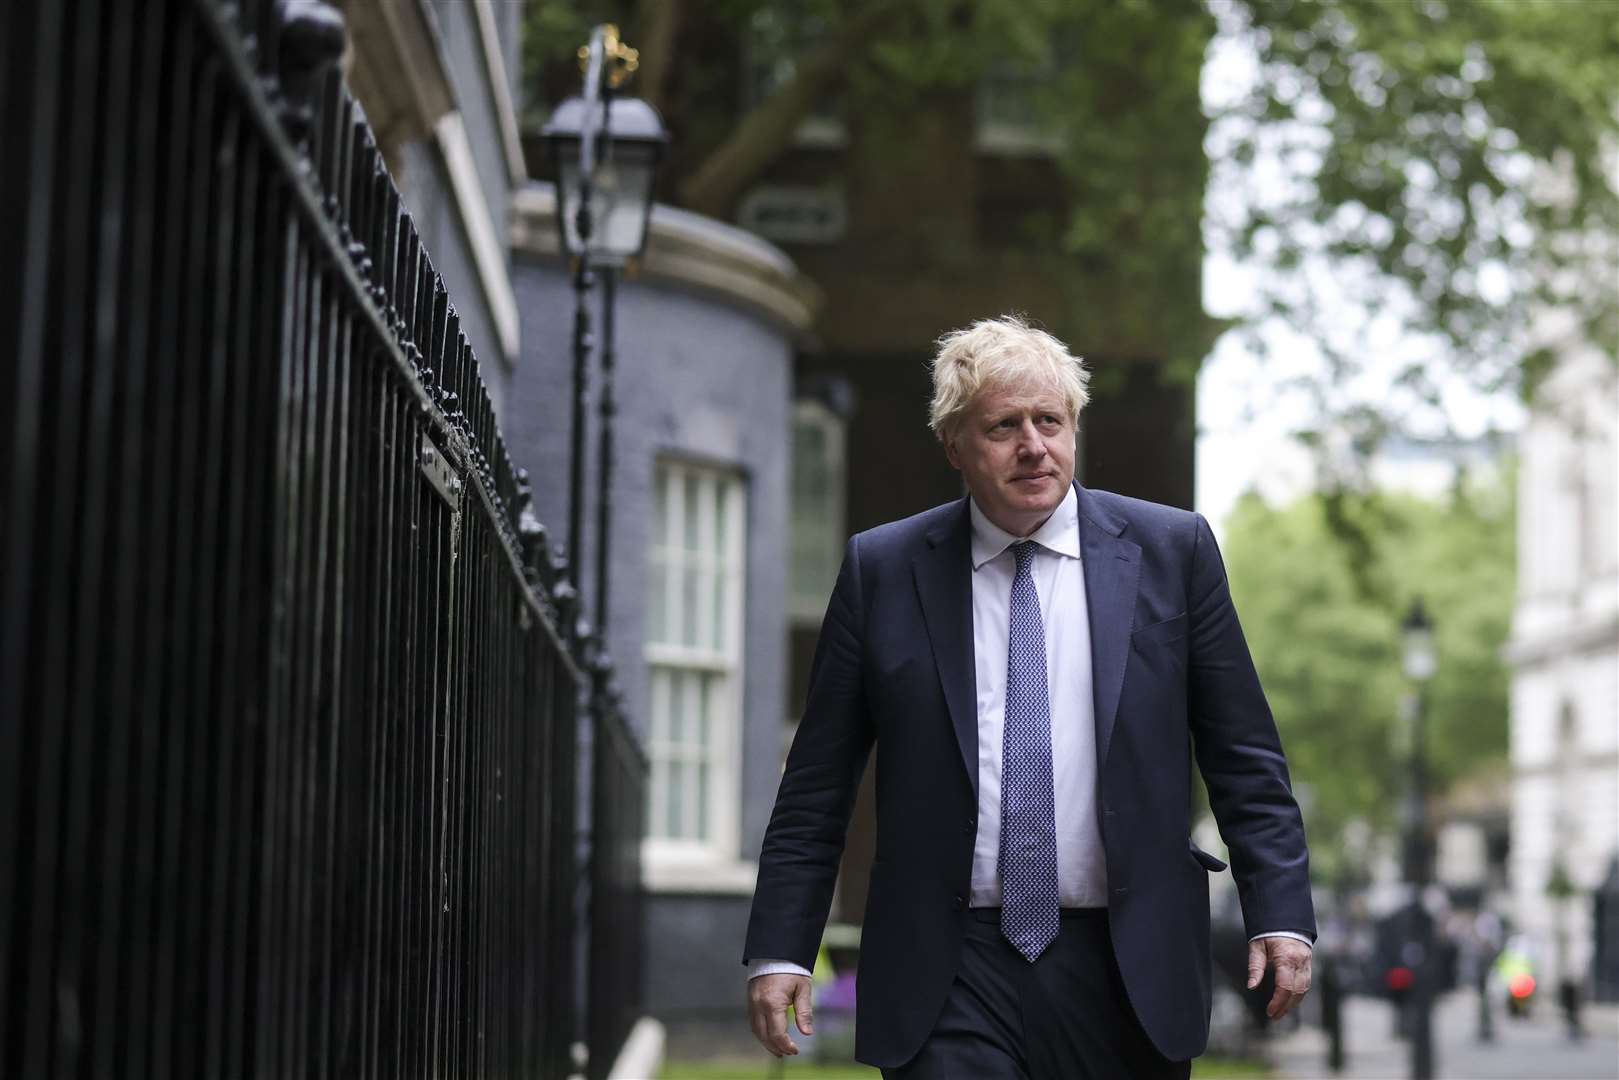 Prime Minister Boris Johnson survived a vote of no confidence on Monday night.